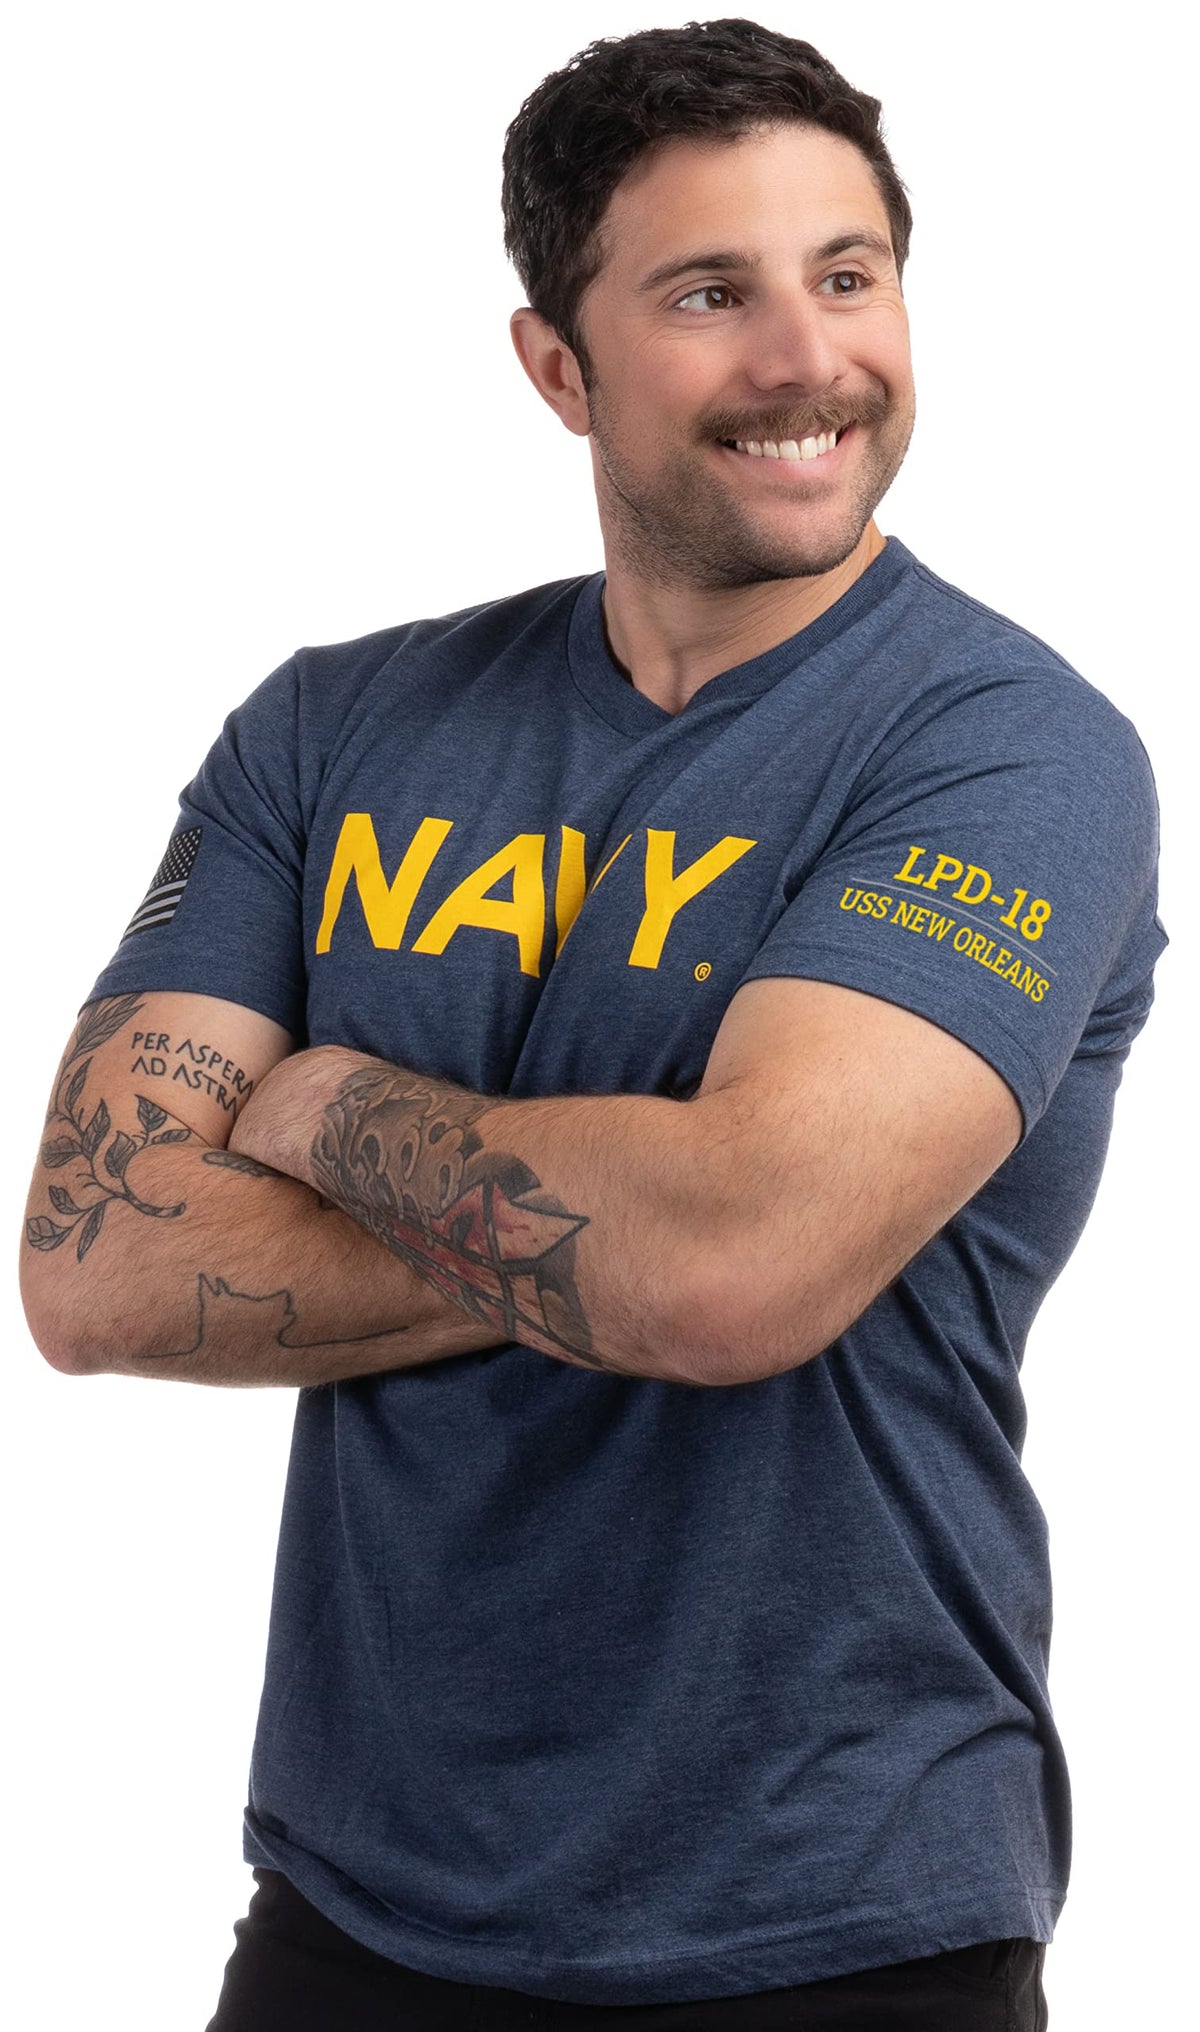 USS New Orleans, LPD-18 | U.S. Navy Sailor Veteran USN United States Naval T-shirt for Men Women